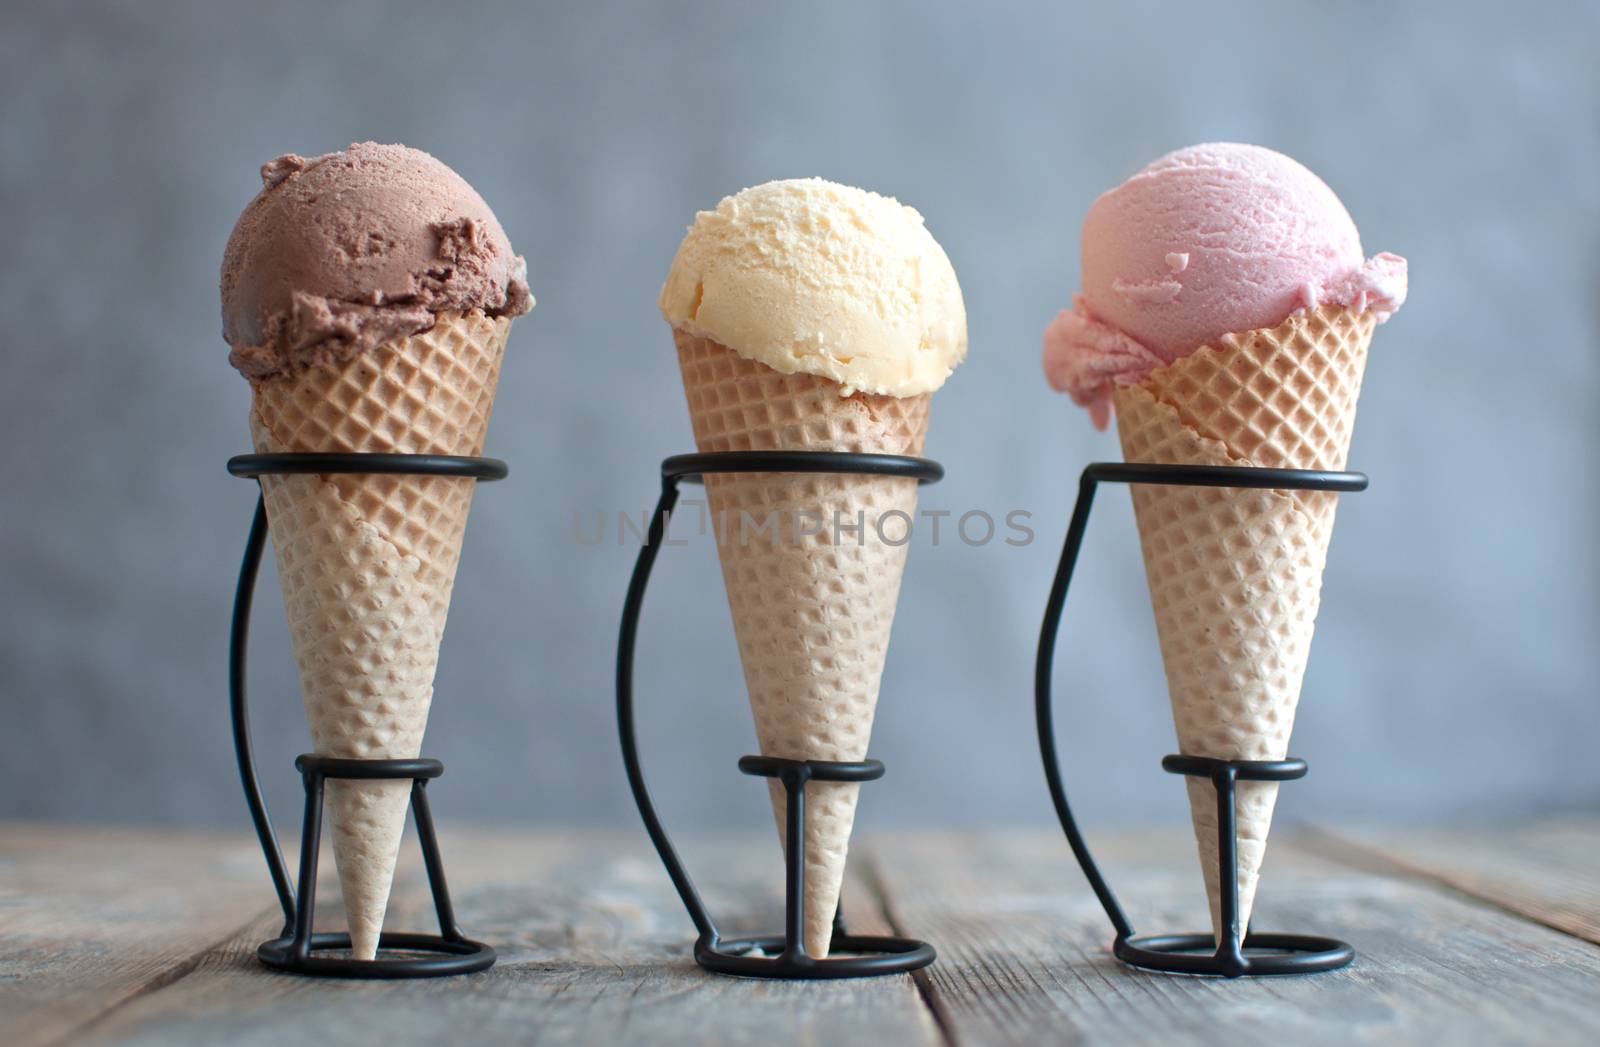 Ice cream cones by unikpix